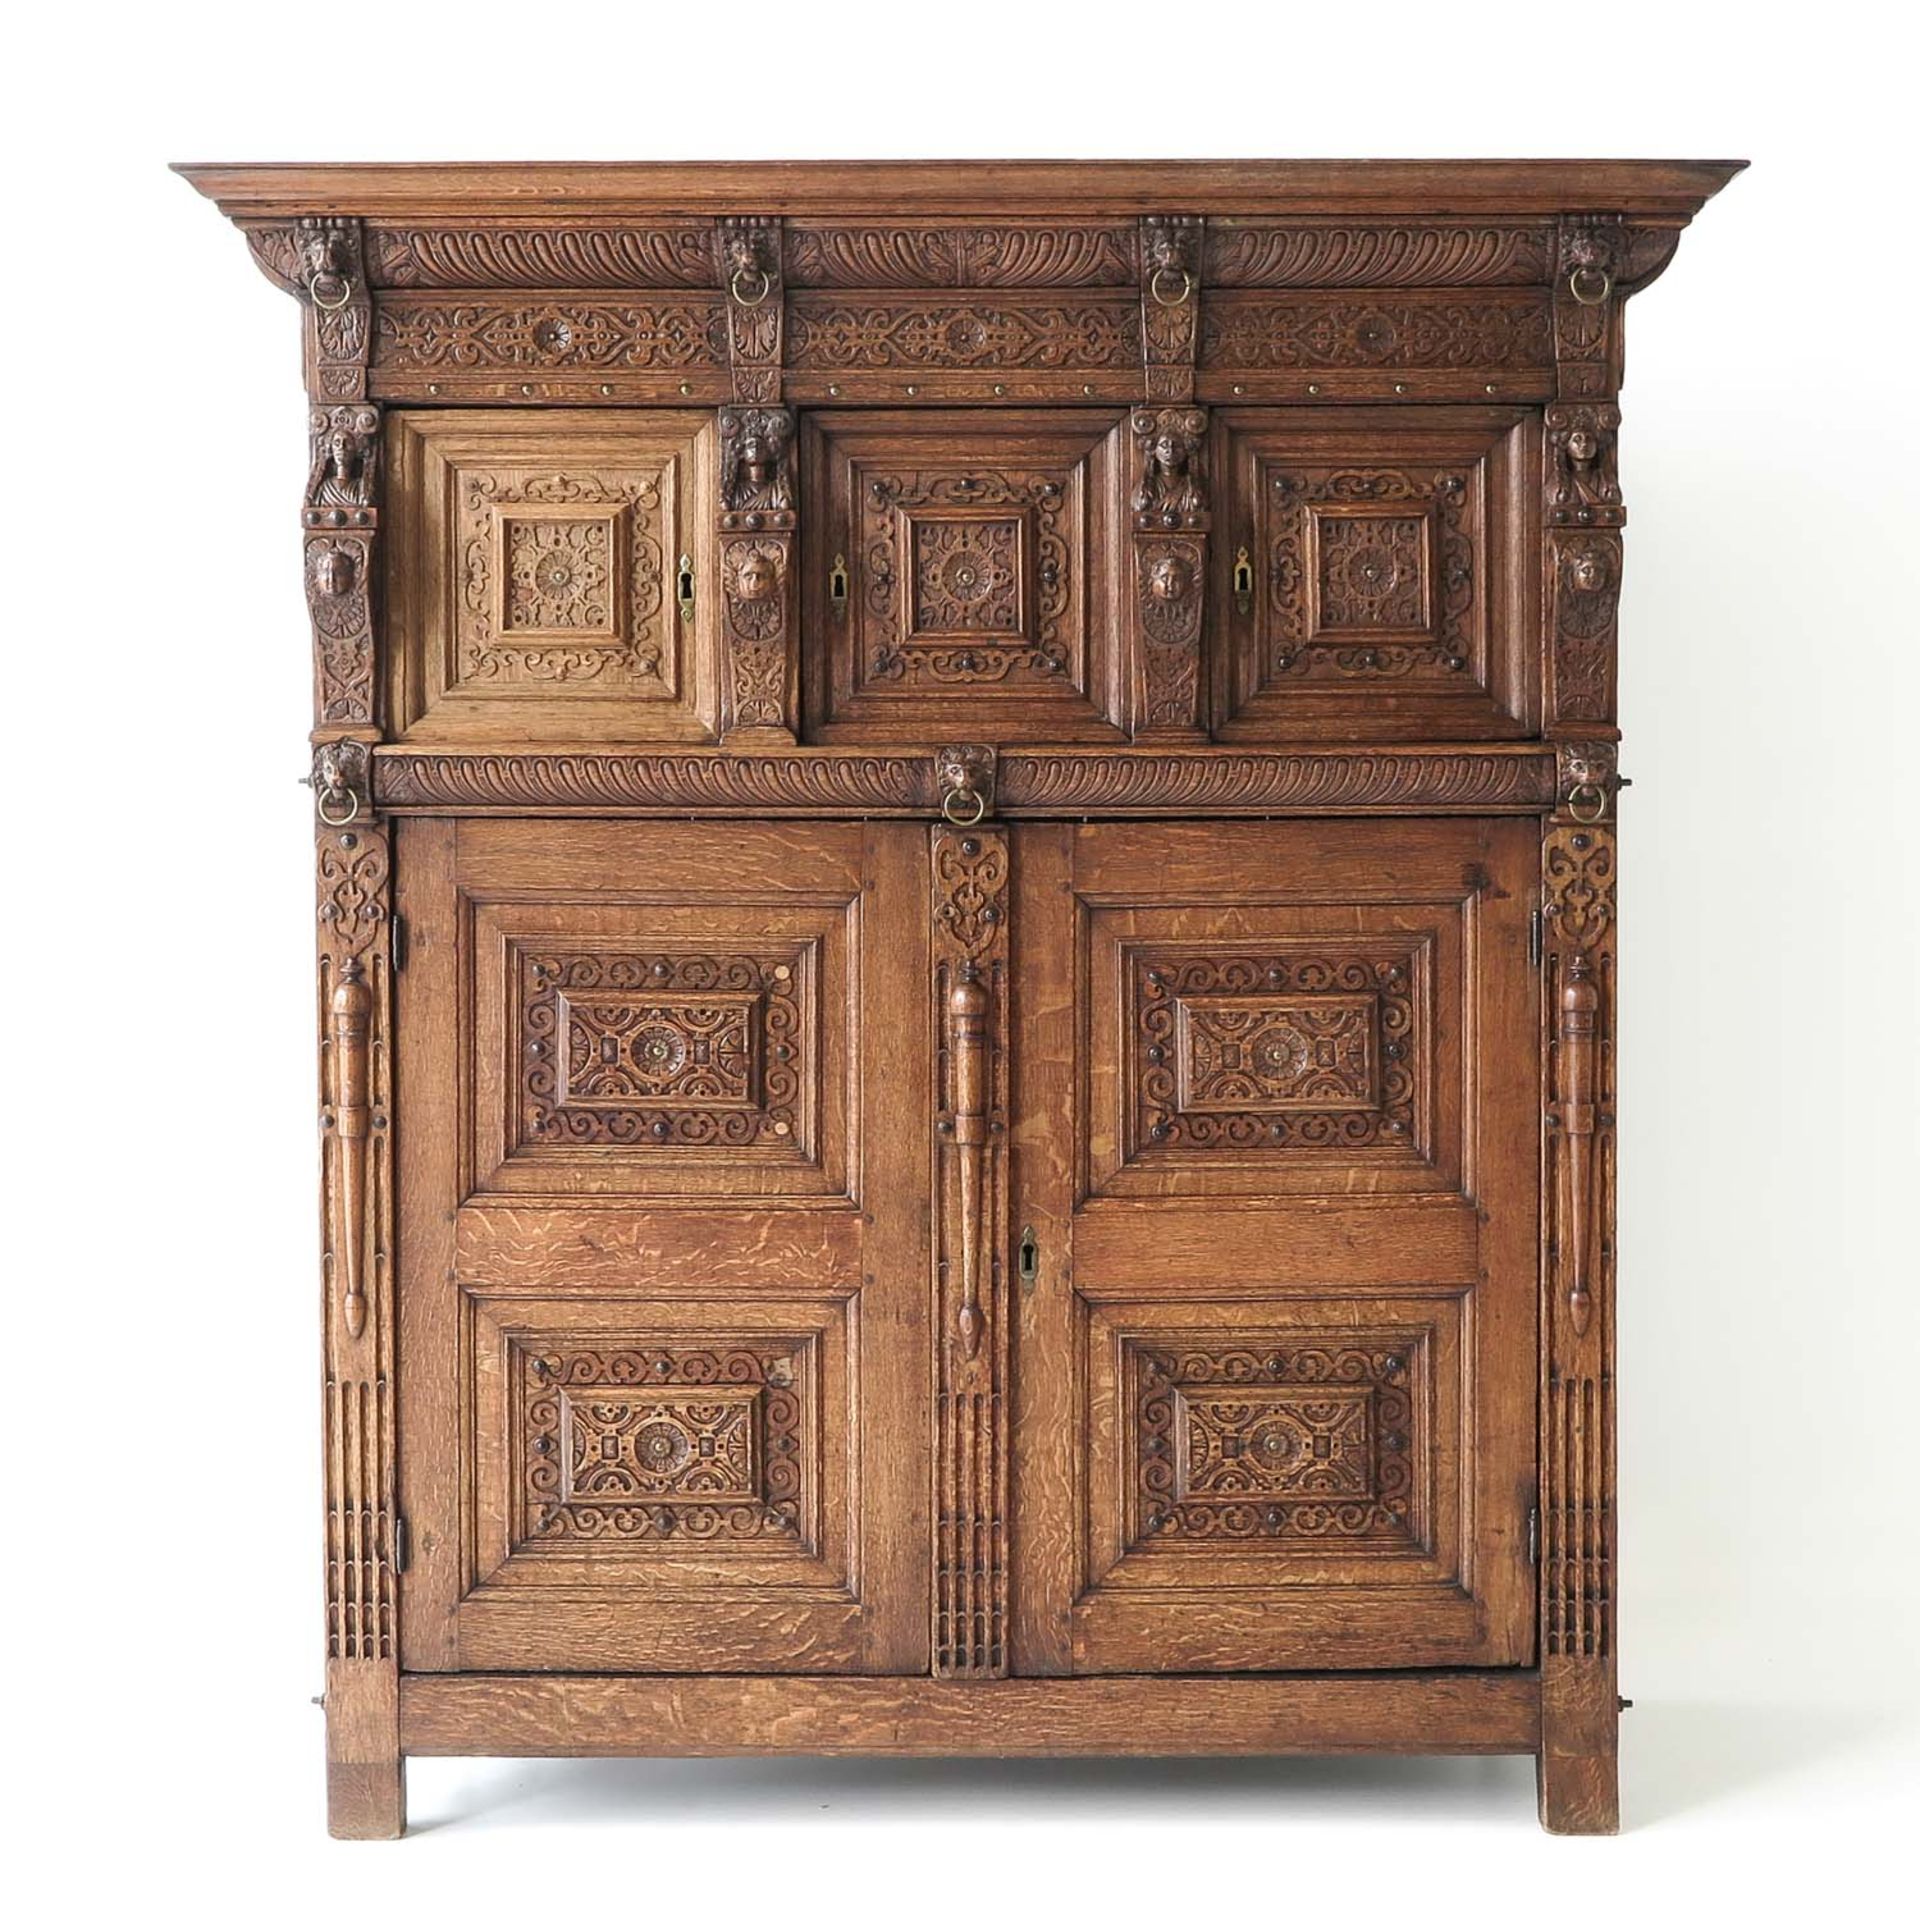 A 17th Century 5 Door Flemish Cabinet